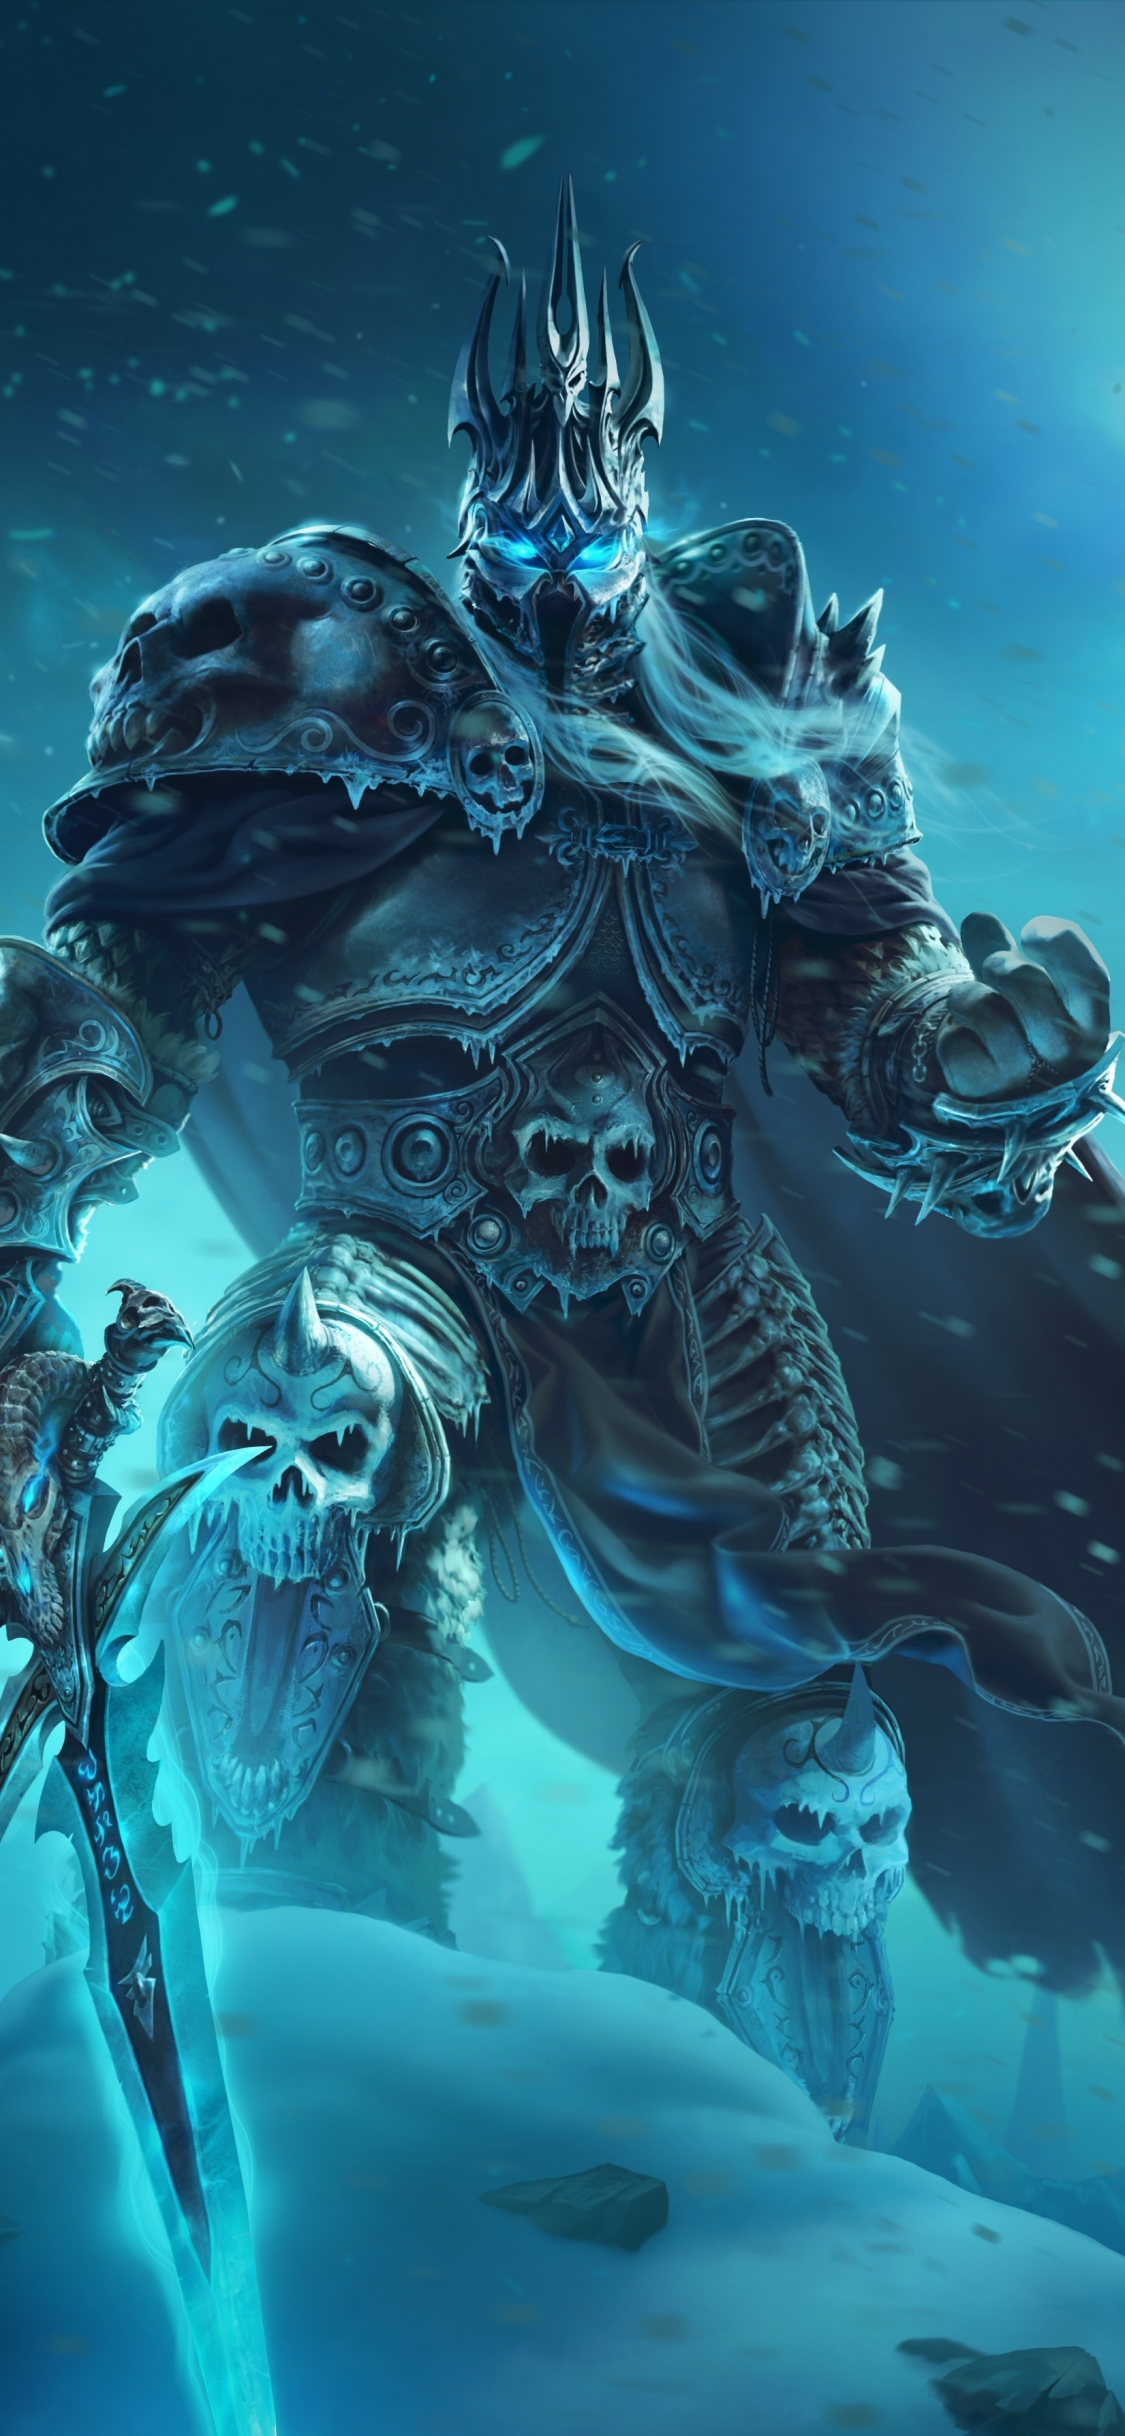 Dark King, World of Warcraft: Wrath of the Lich King, online game, 1125x2436 wallpaper